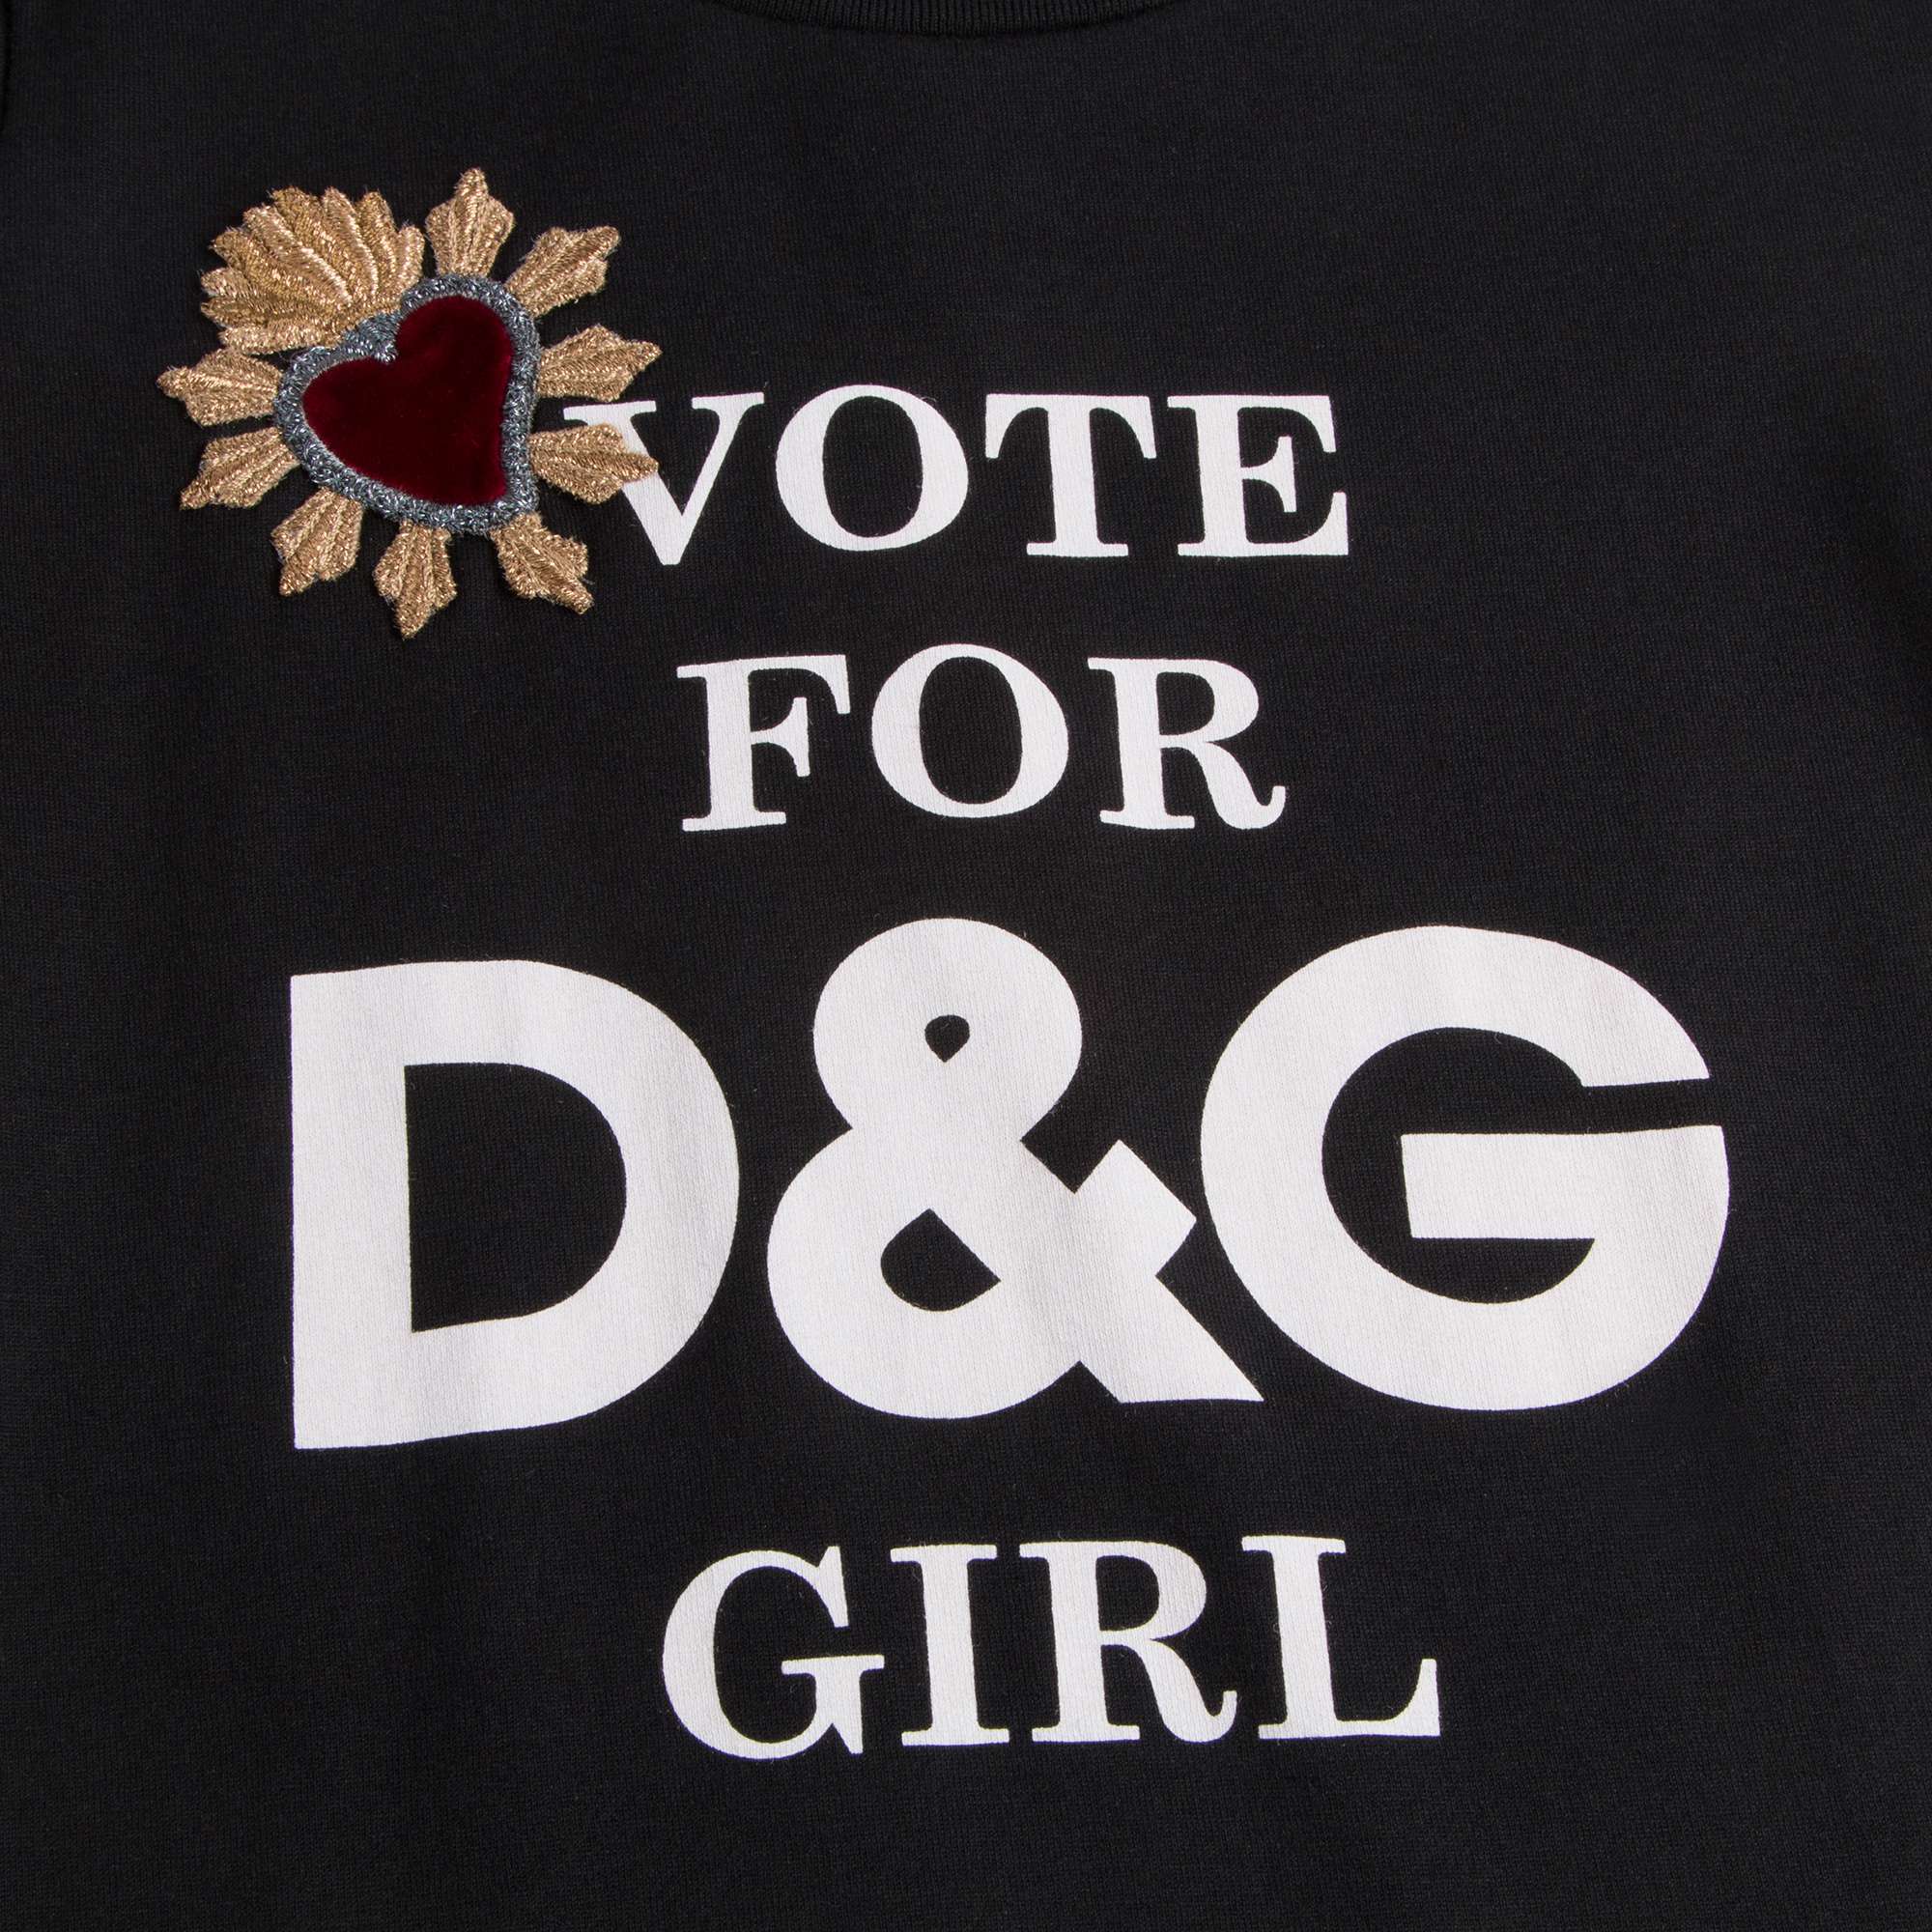 Girls & Boys Black "DG" T-shirt